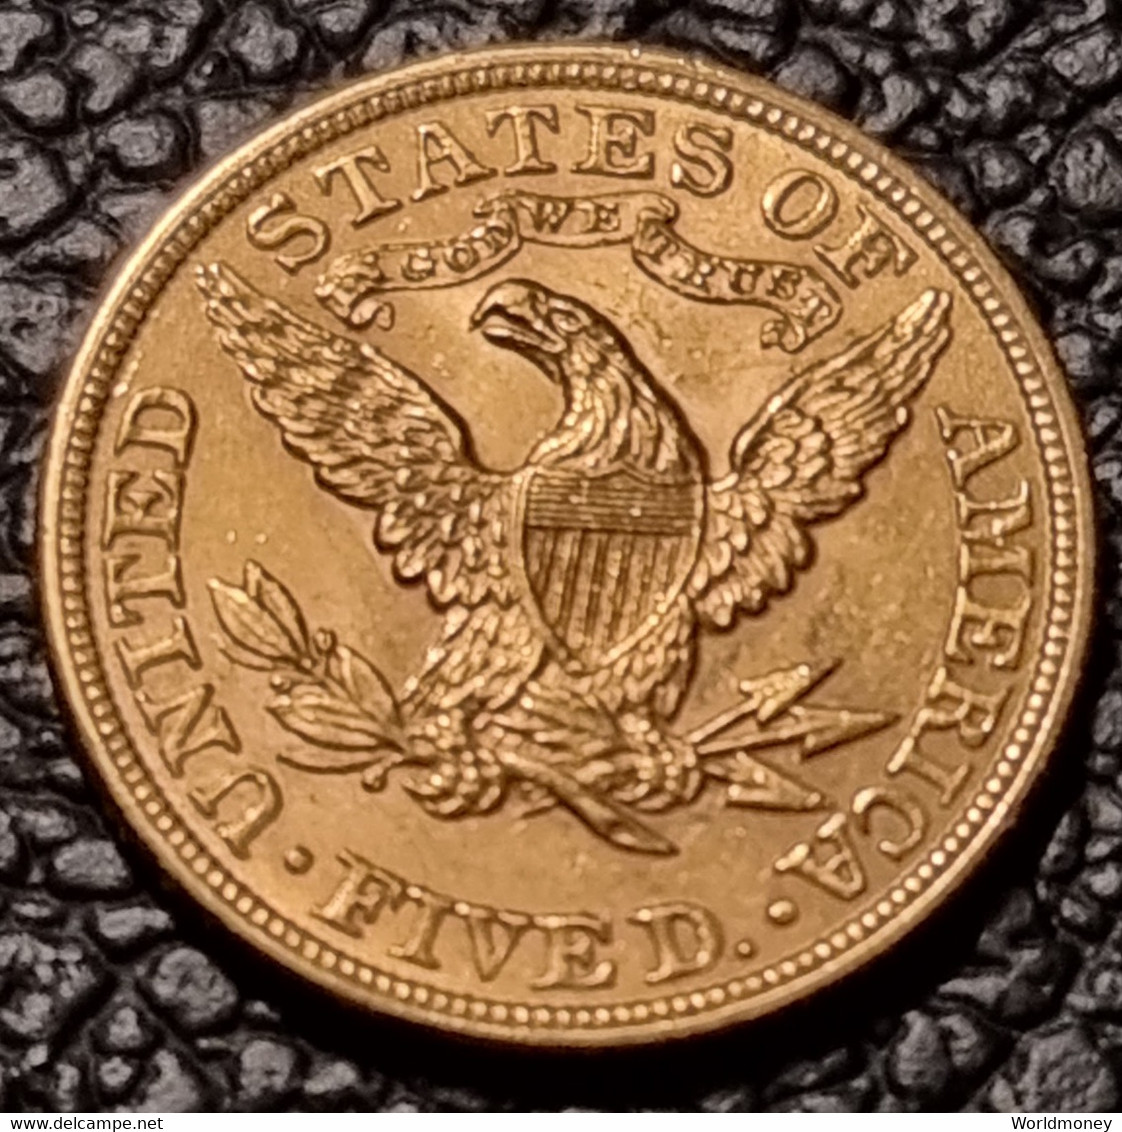 United States 5 Dollars 1899 (Gold) - 5$ - Half Eagles - 1866-1908: Coronet Head (Testa Coronata)